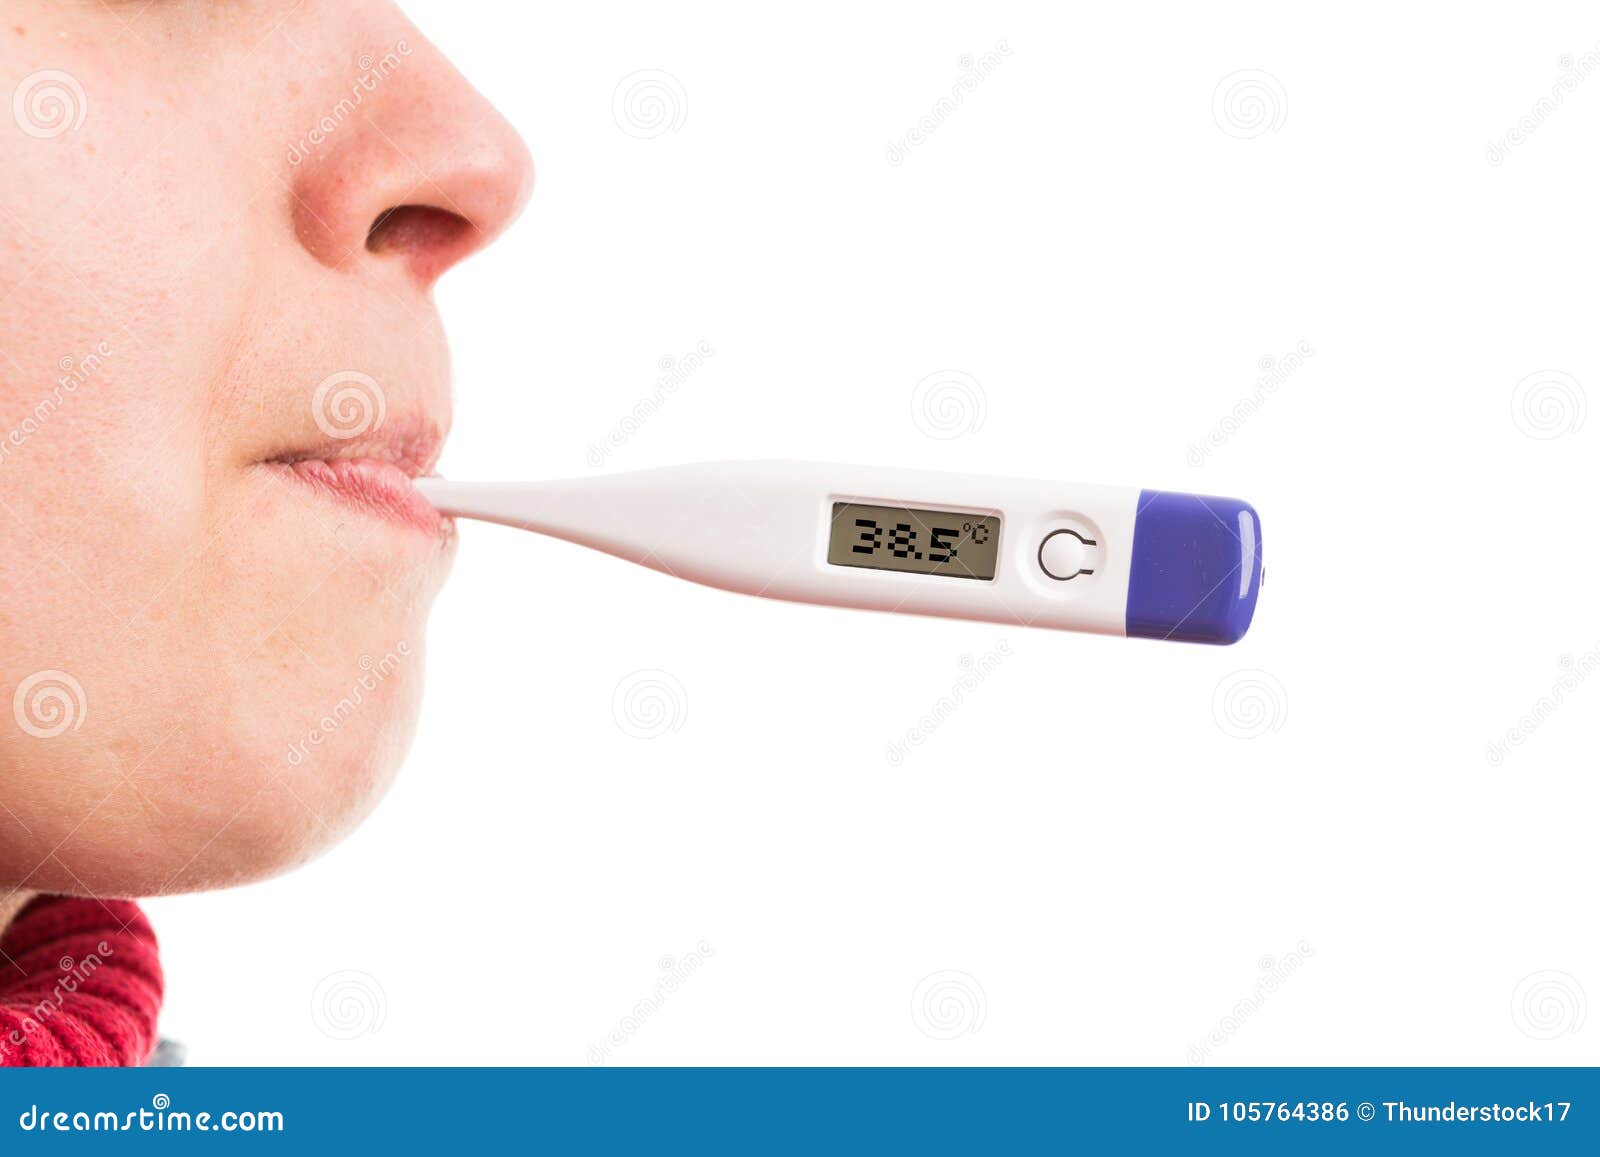 Правильная температура во рту